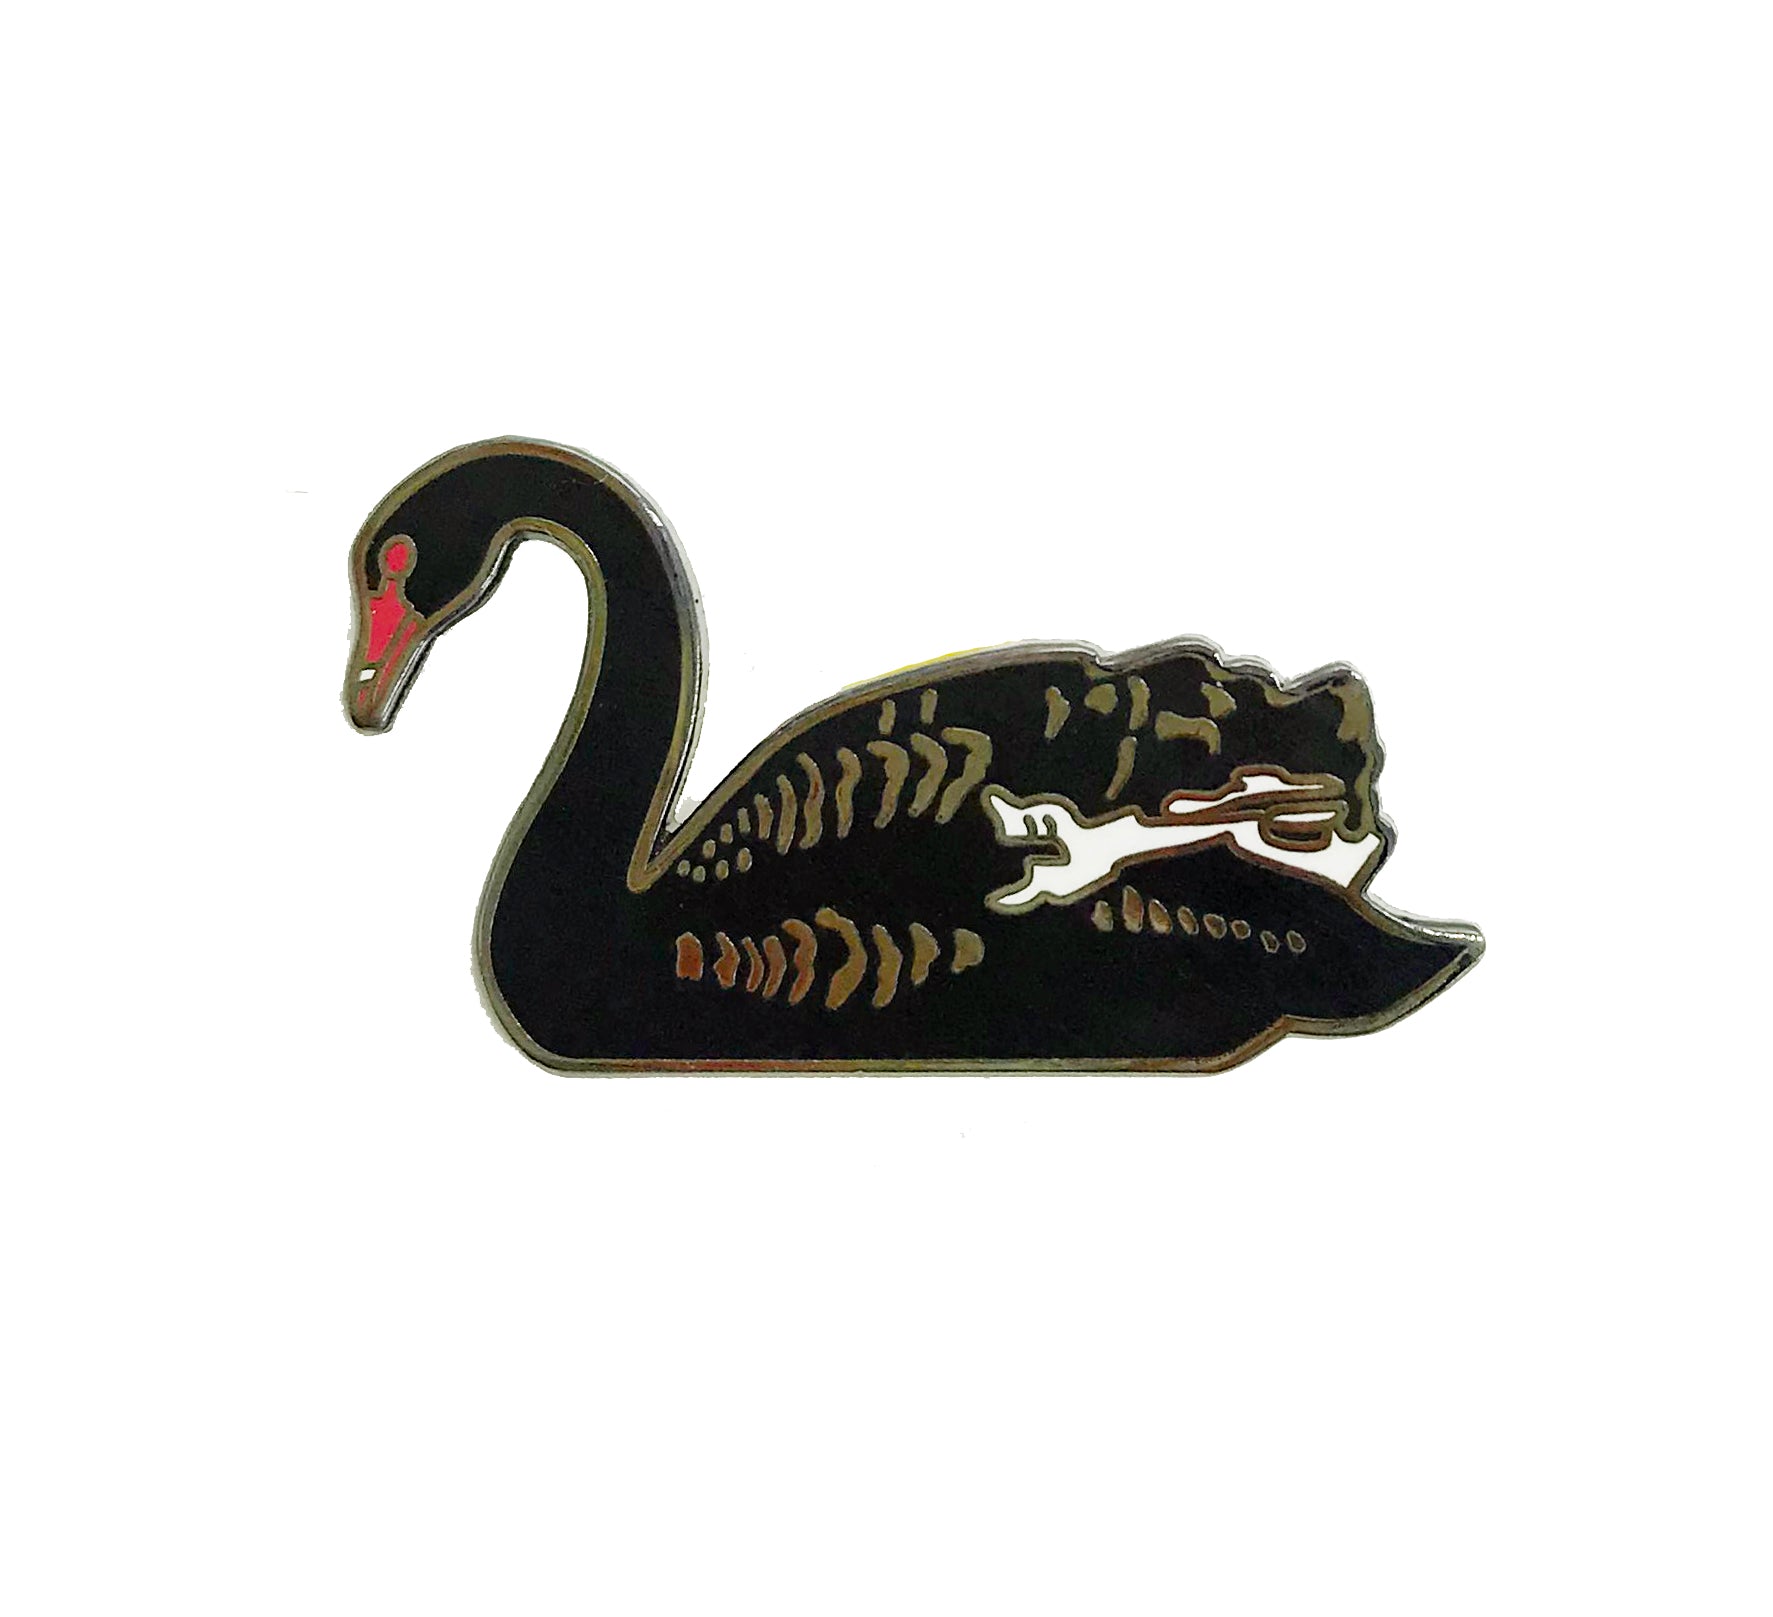 Enamel Pin - Black Swan - Natural Values